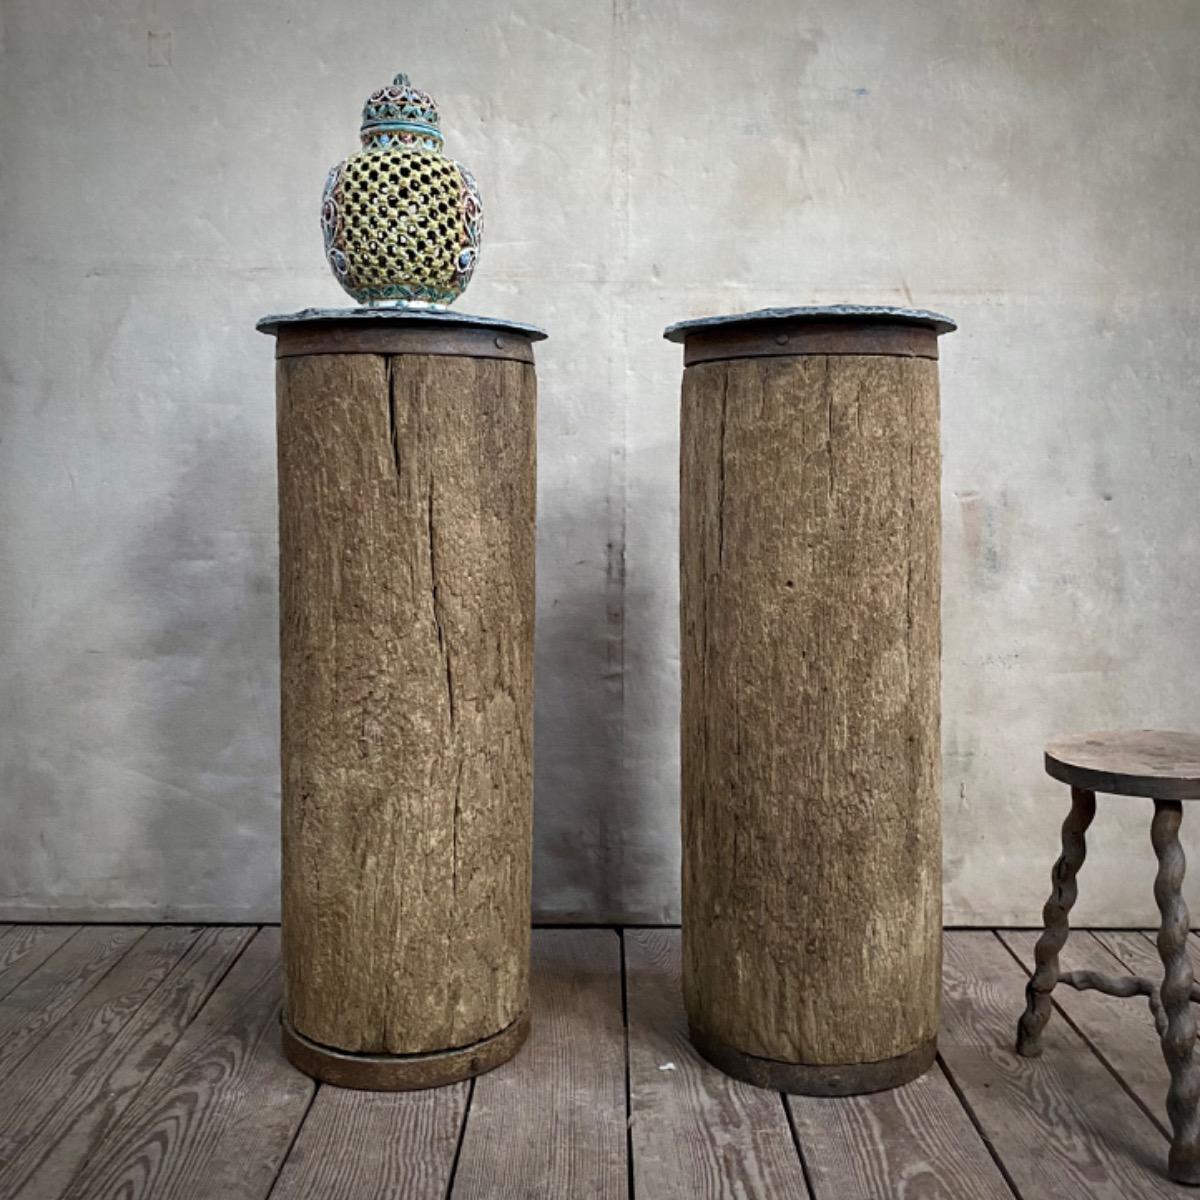 Primitive wooden pedestals